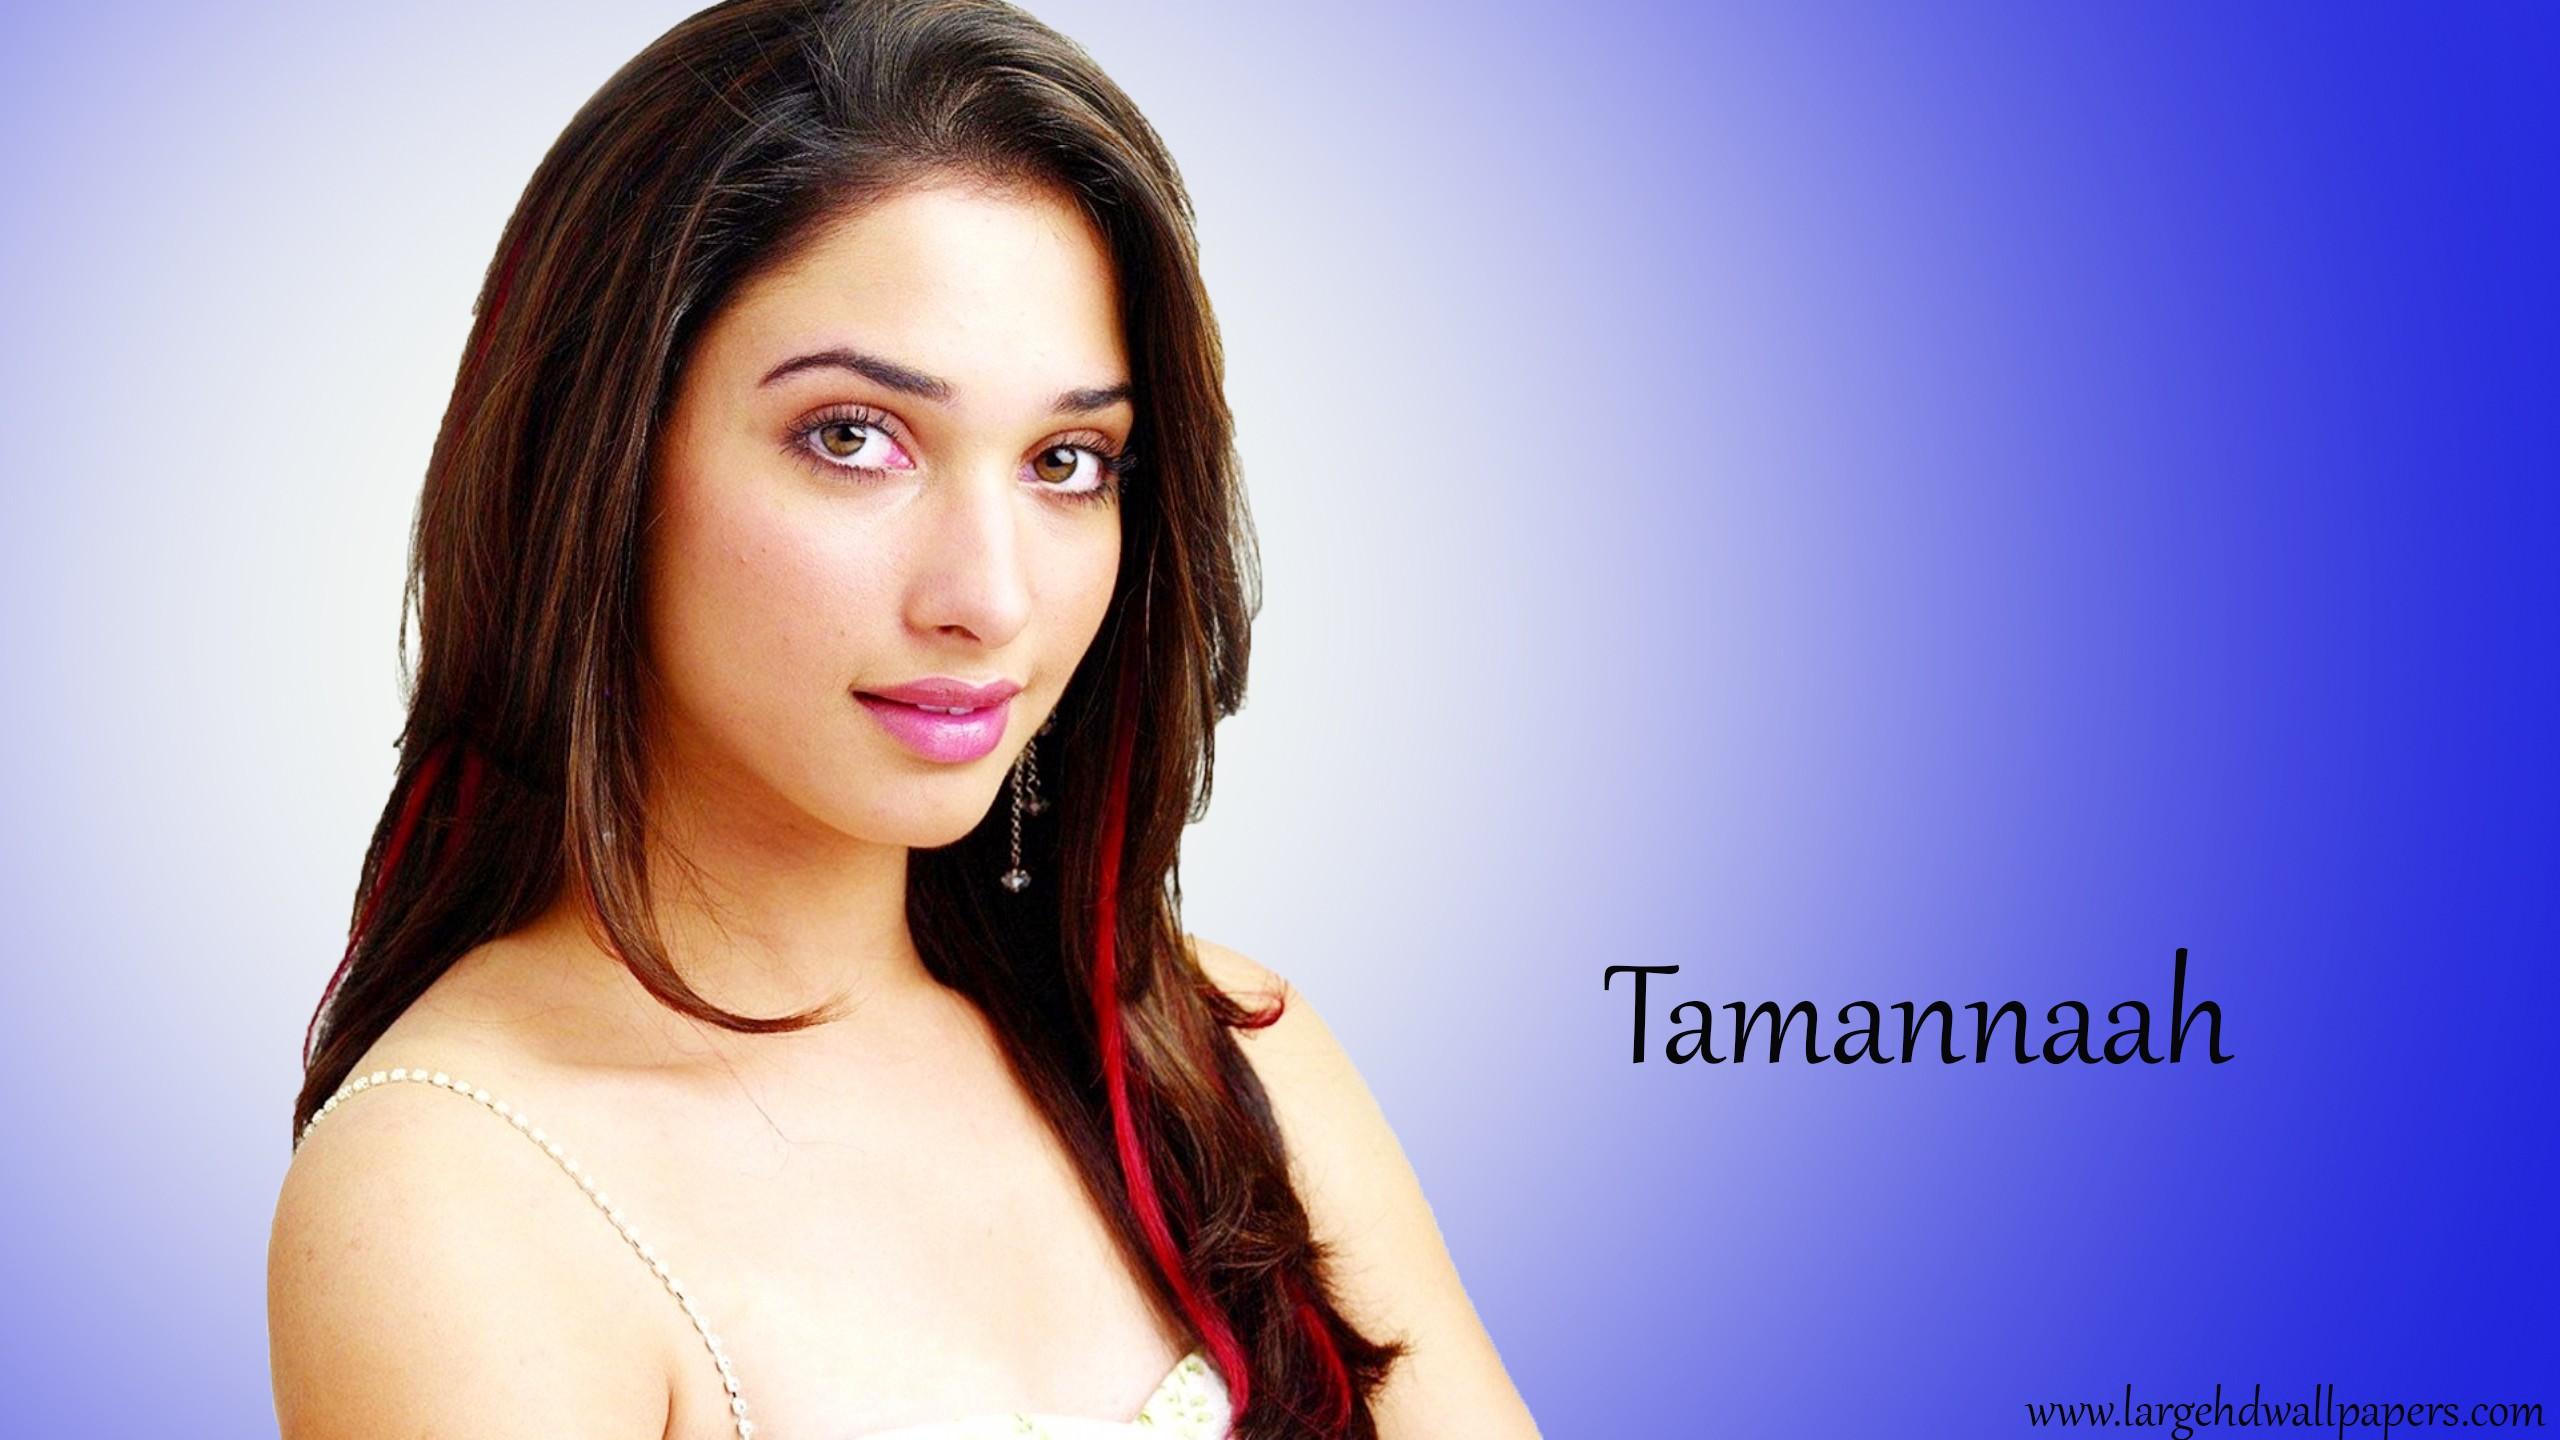 Tamil Telugu Films Actress tamanna bhatia Full HD Picture